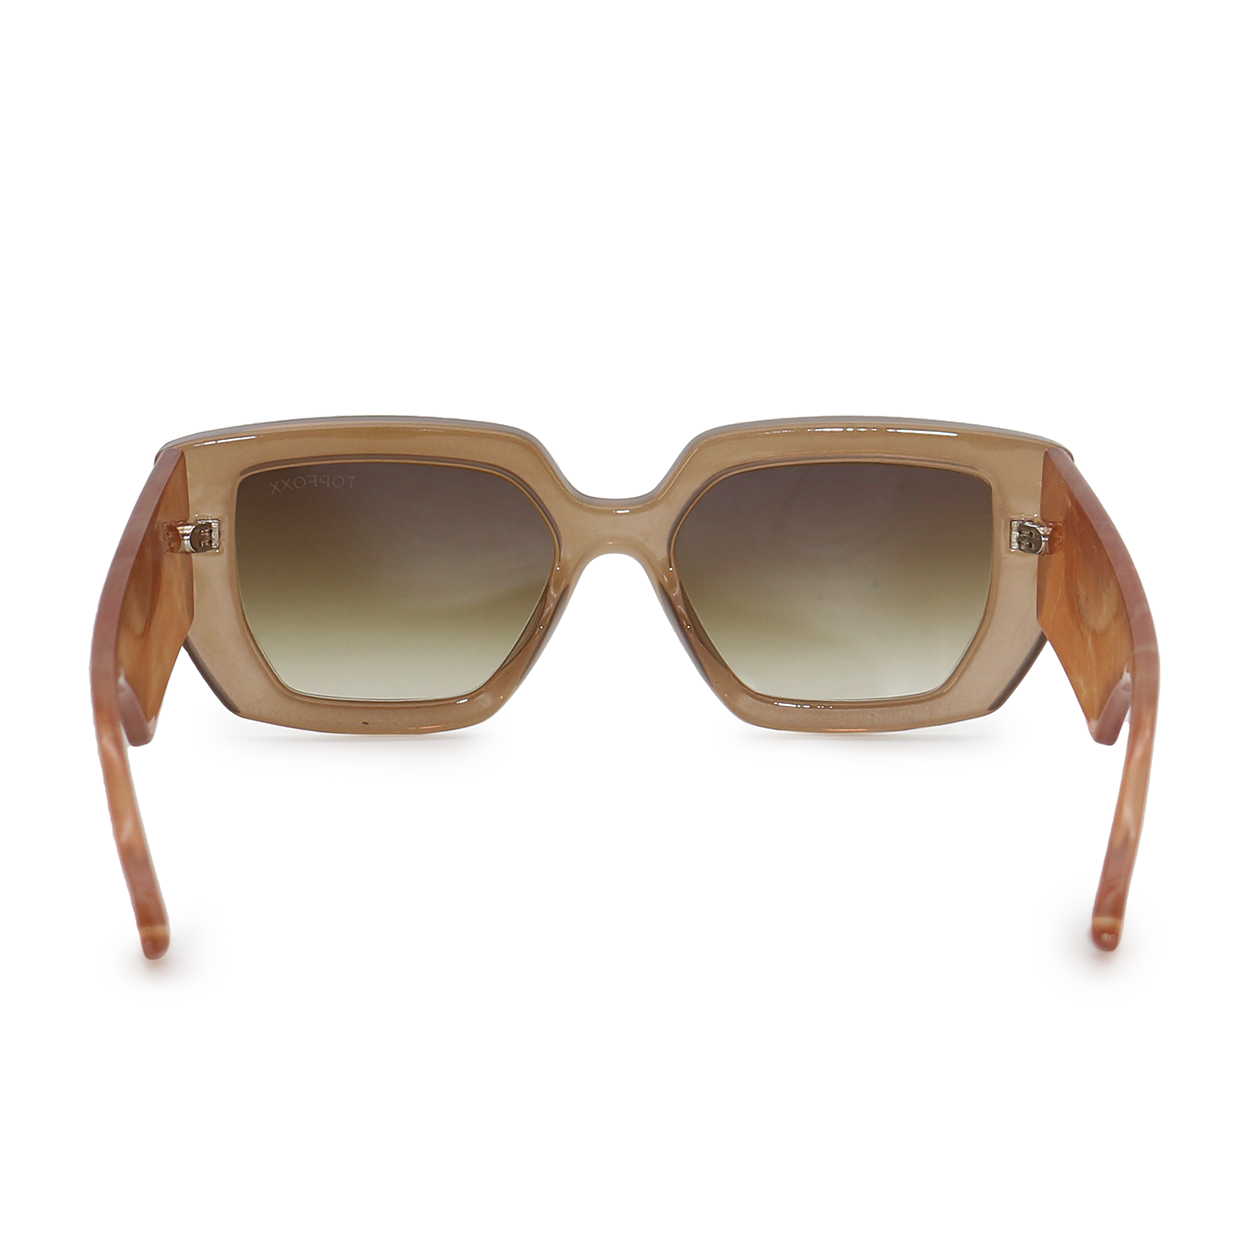 TopFoxx - Incognito Coffee - Oversized Square Sunglasses for Women - Eco Eyeware - Big Arms Sunglasses Back Profile 